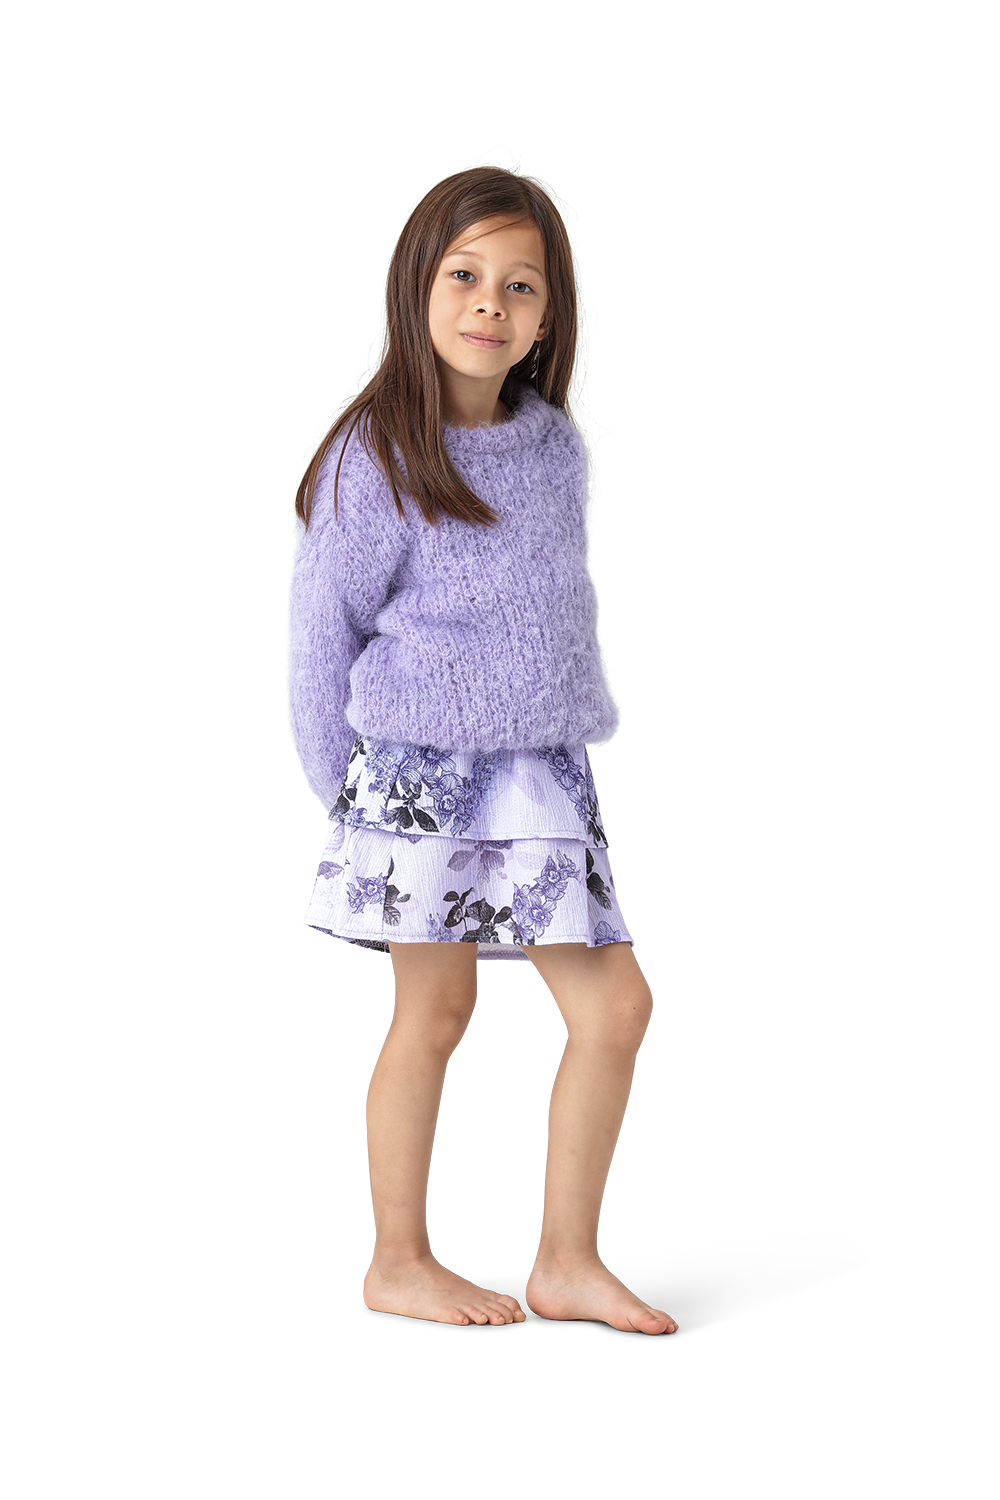 Leonnie Alpaca Pullover Kids Lilac - Sample